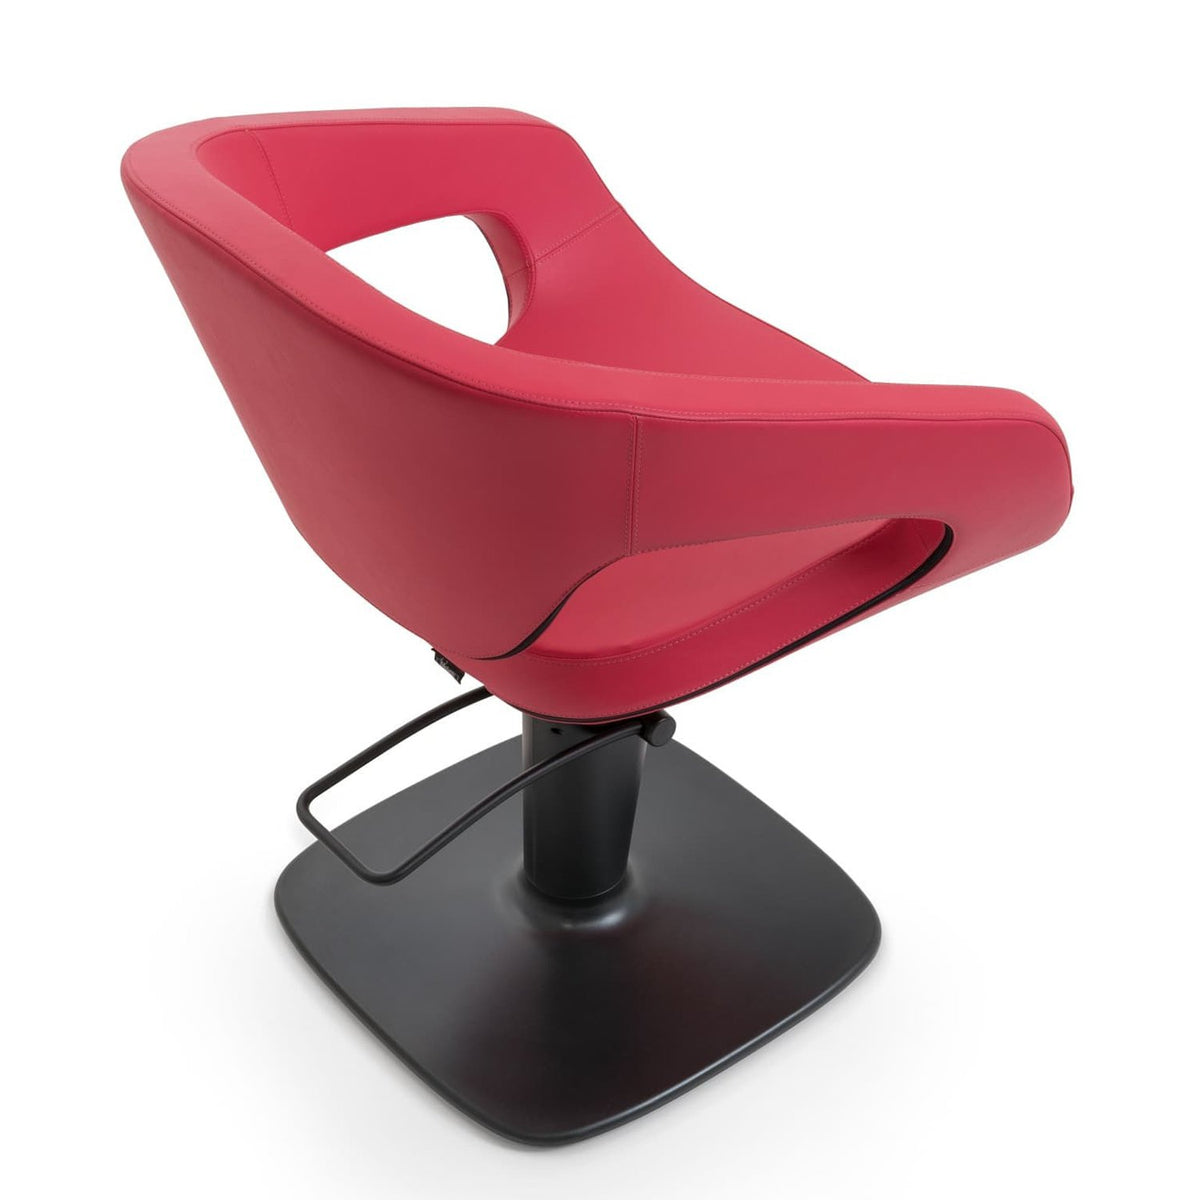 MALETTI Striptease - Swivel Styling Chair, Removable Interchangeable Vinyl Upholstery